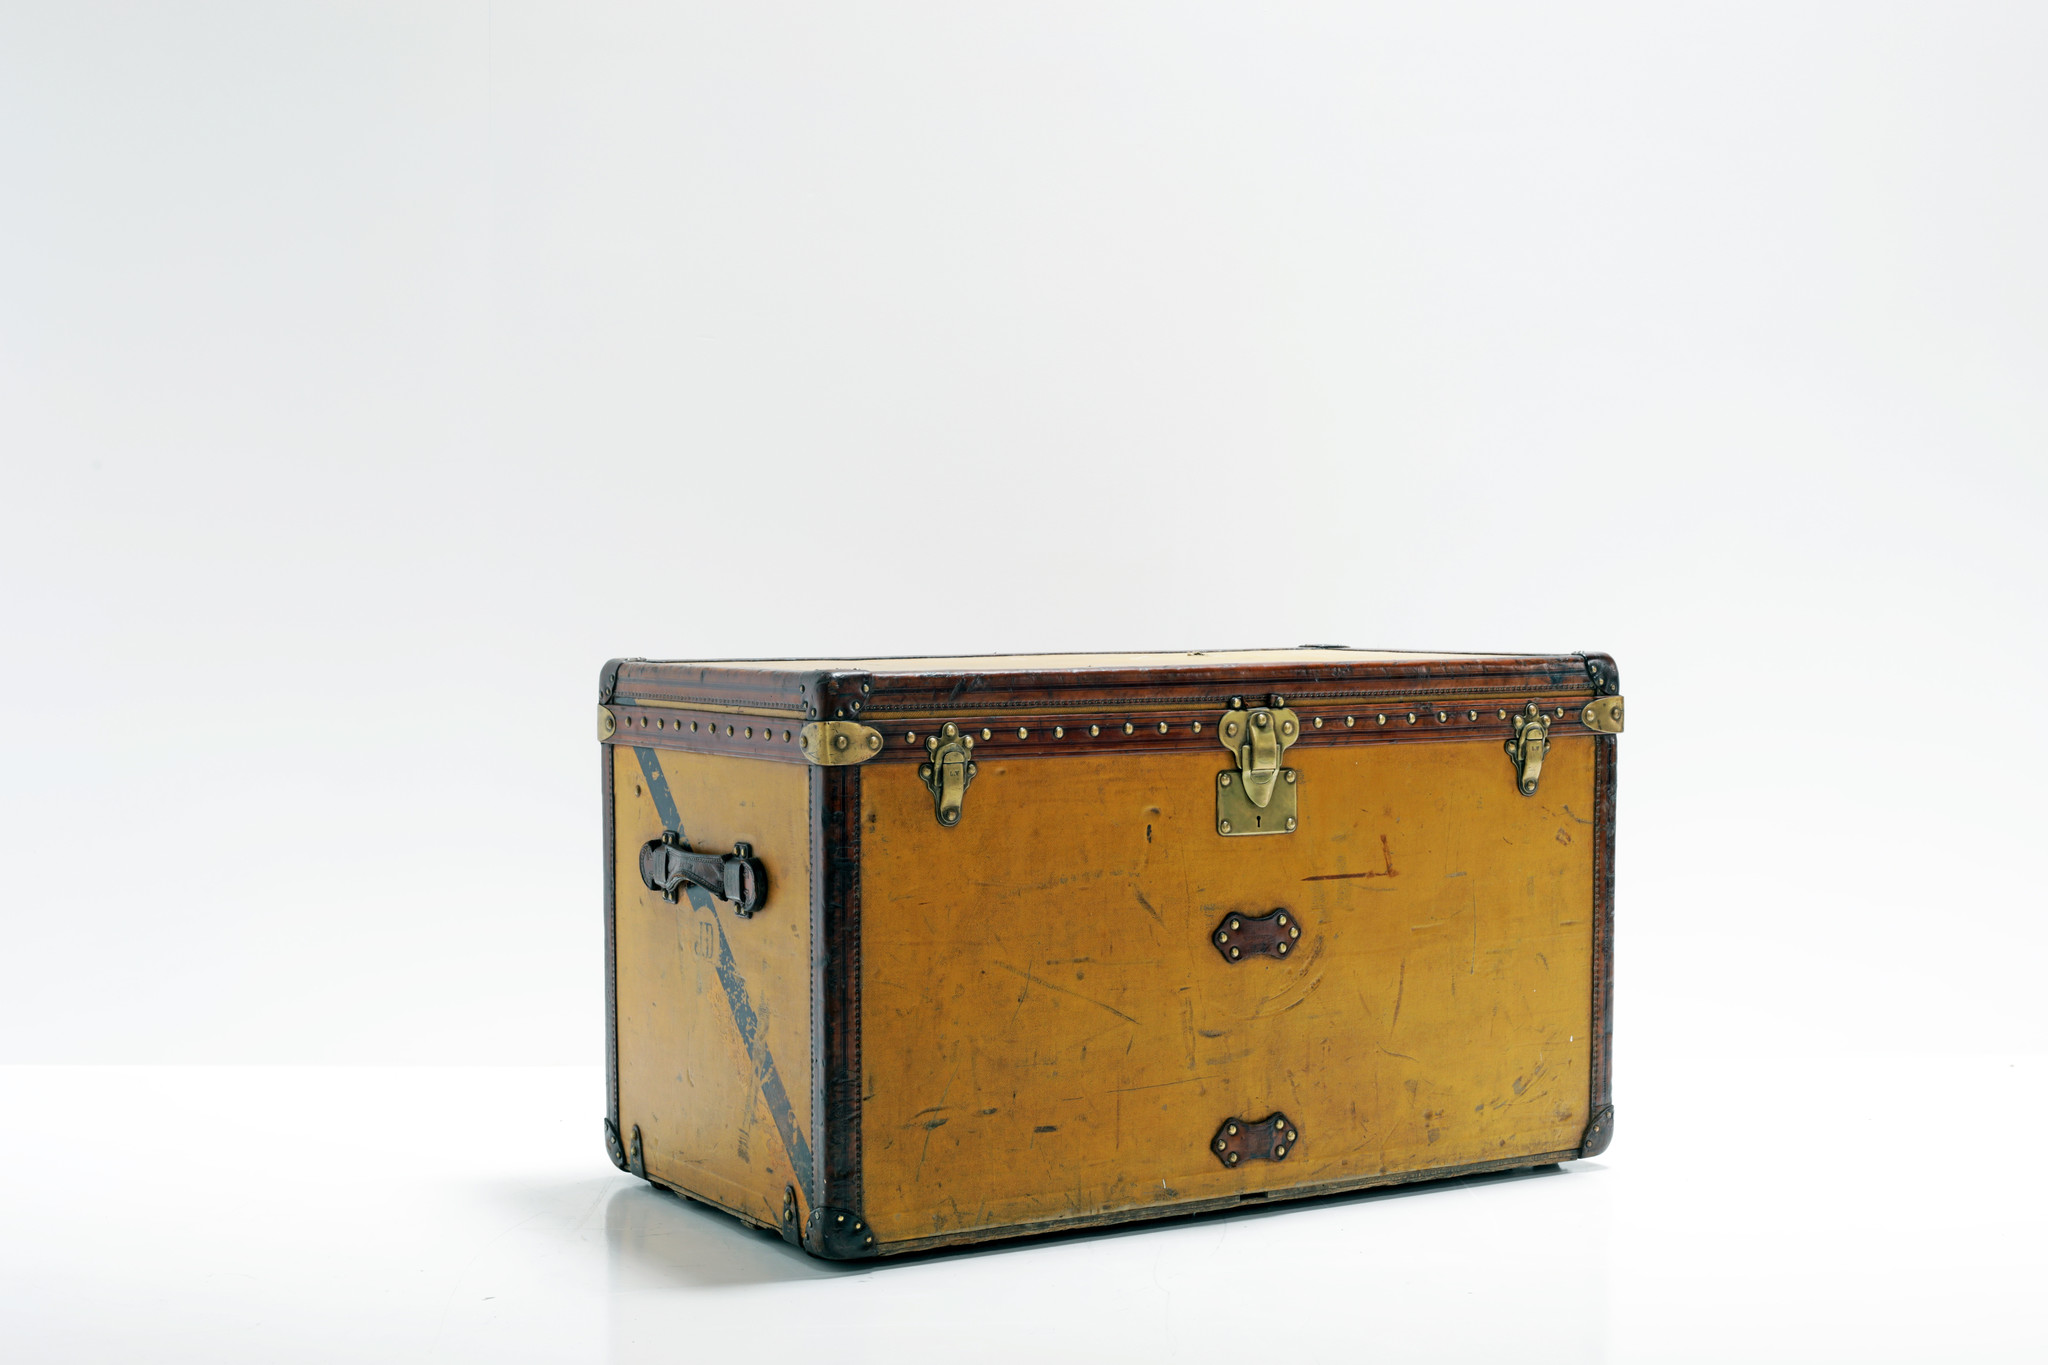 XL Louis vuitton suitcase "Vuittonite" yellow, 1910